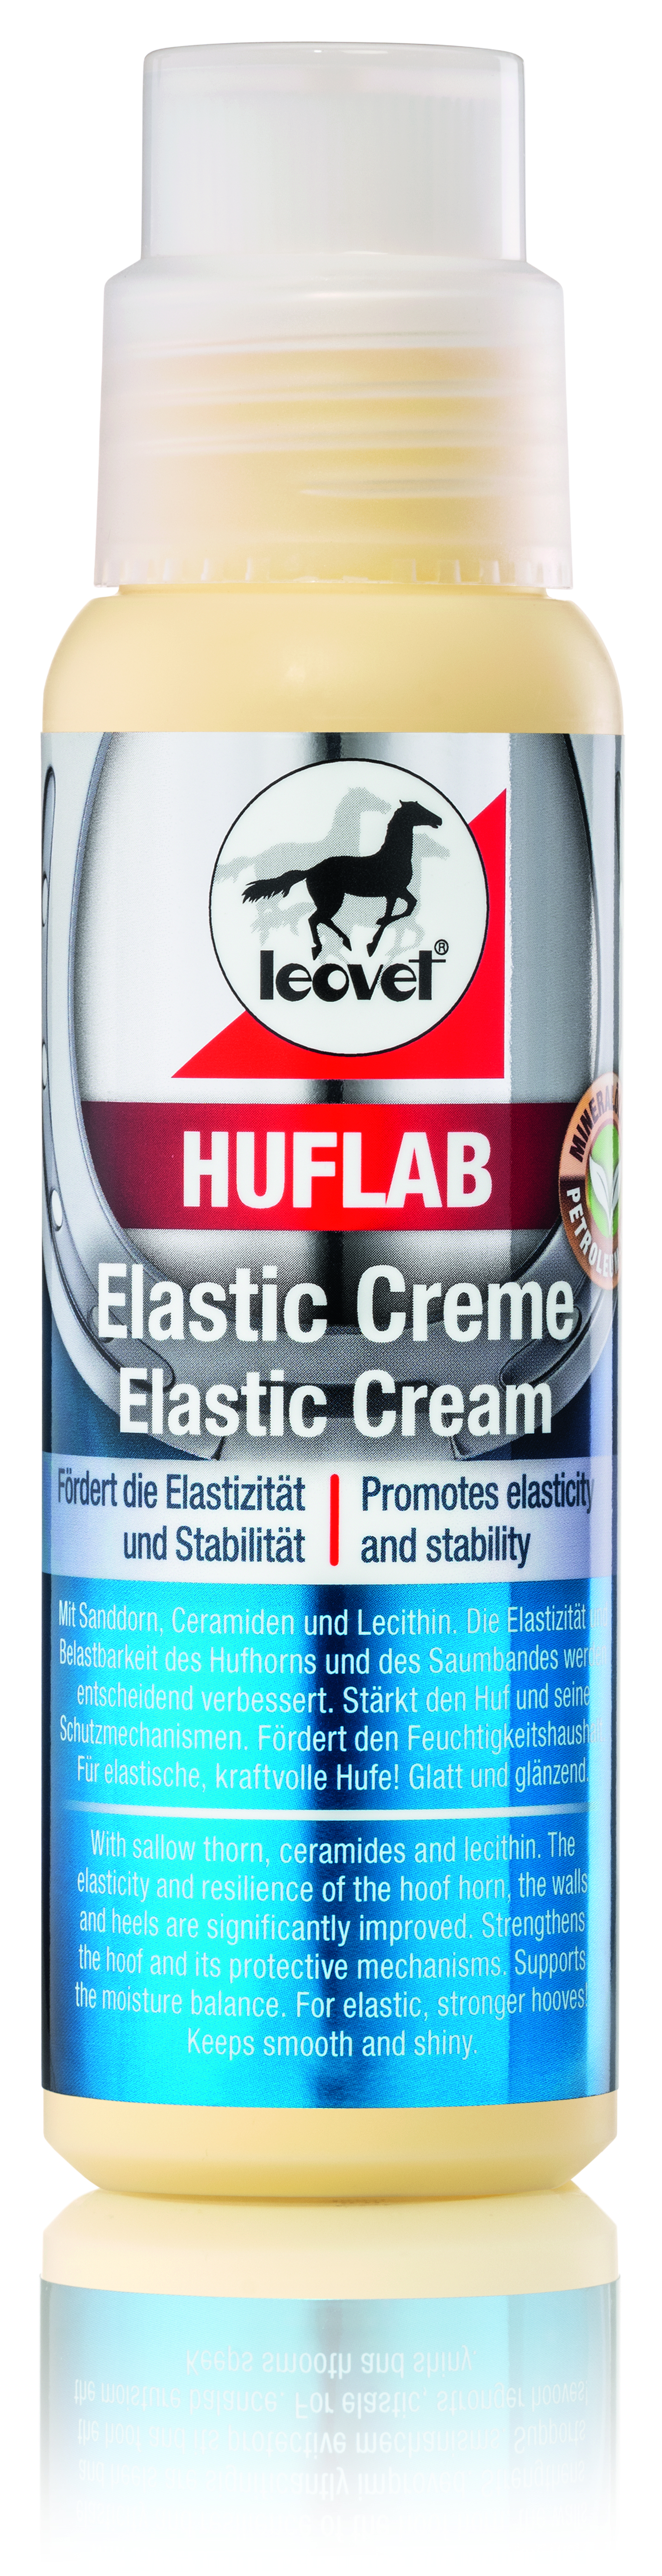 Leovet HUFLAB Elastic Creme